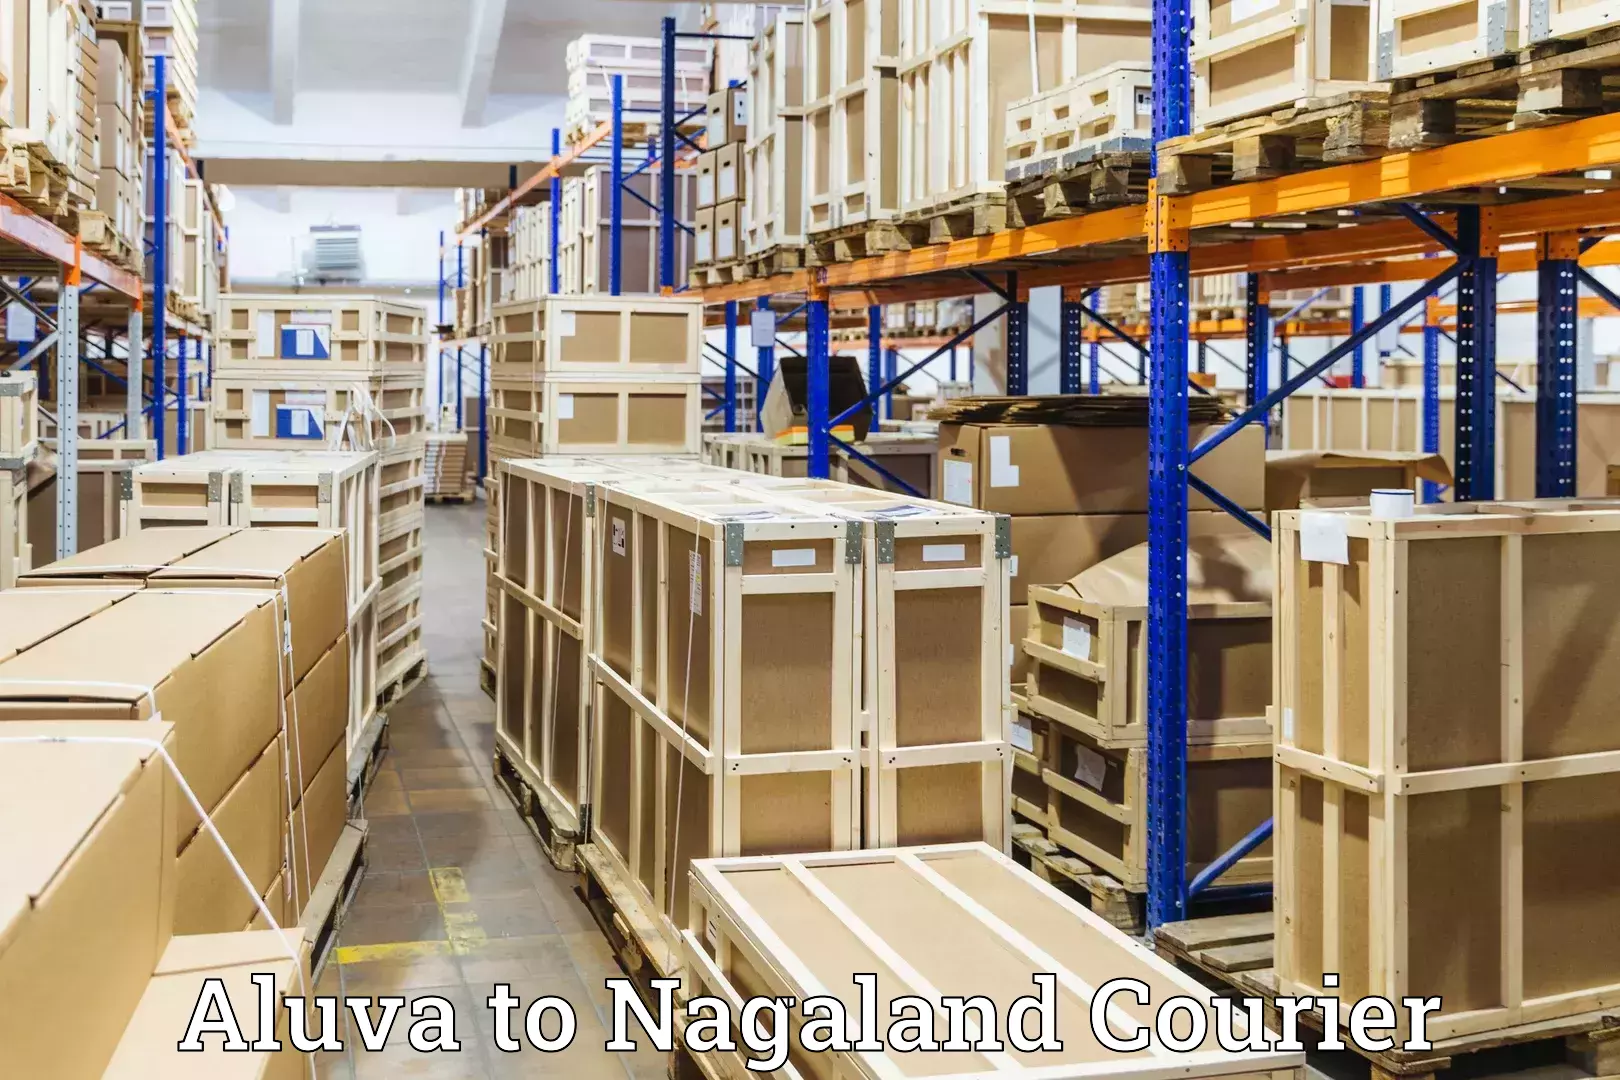 Luggage transport consultancy Aluva to Nagaland